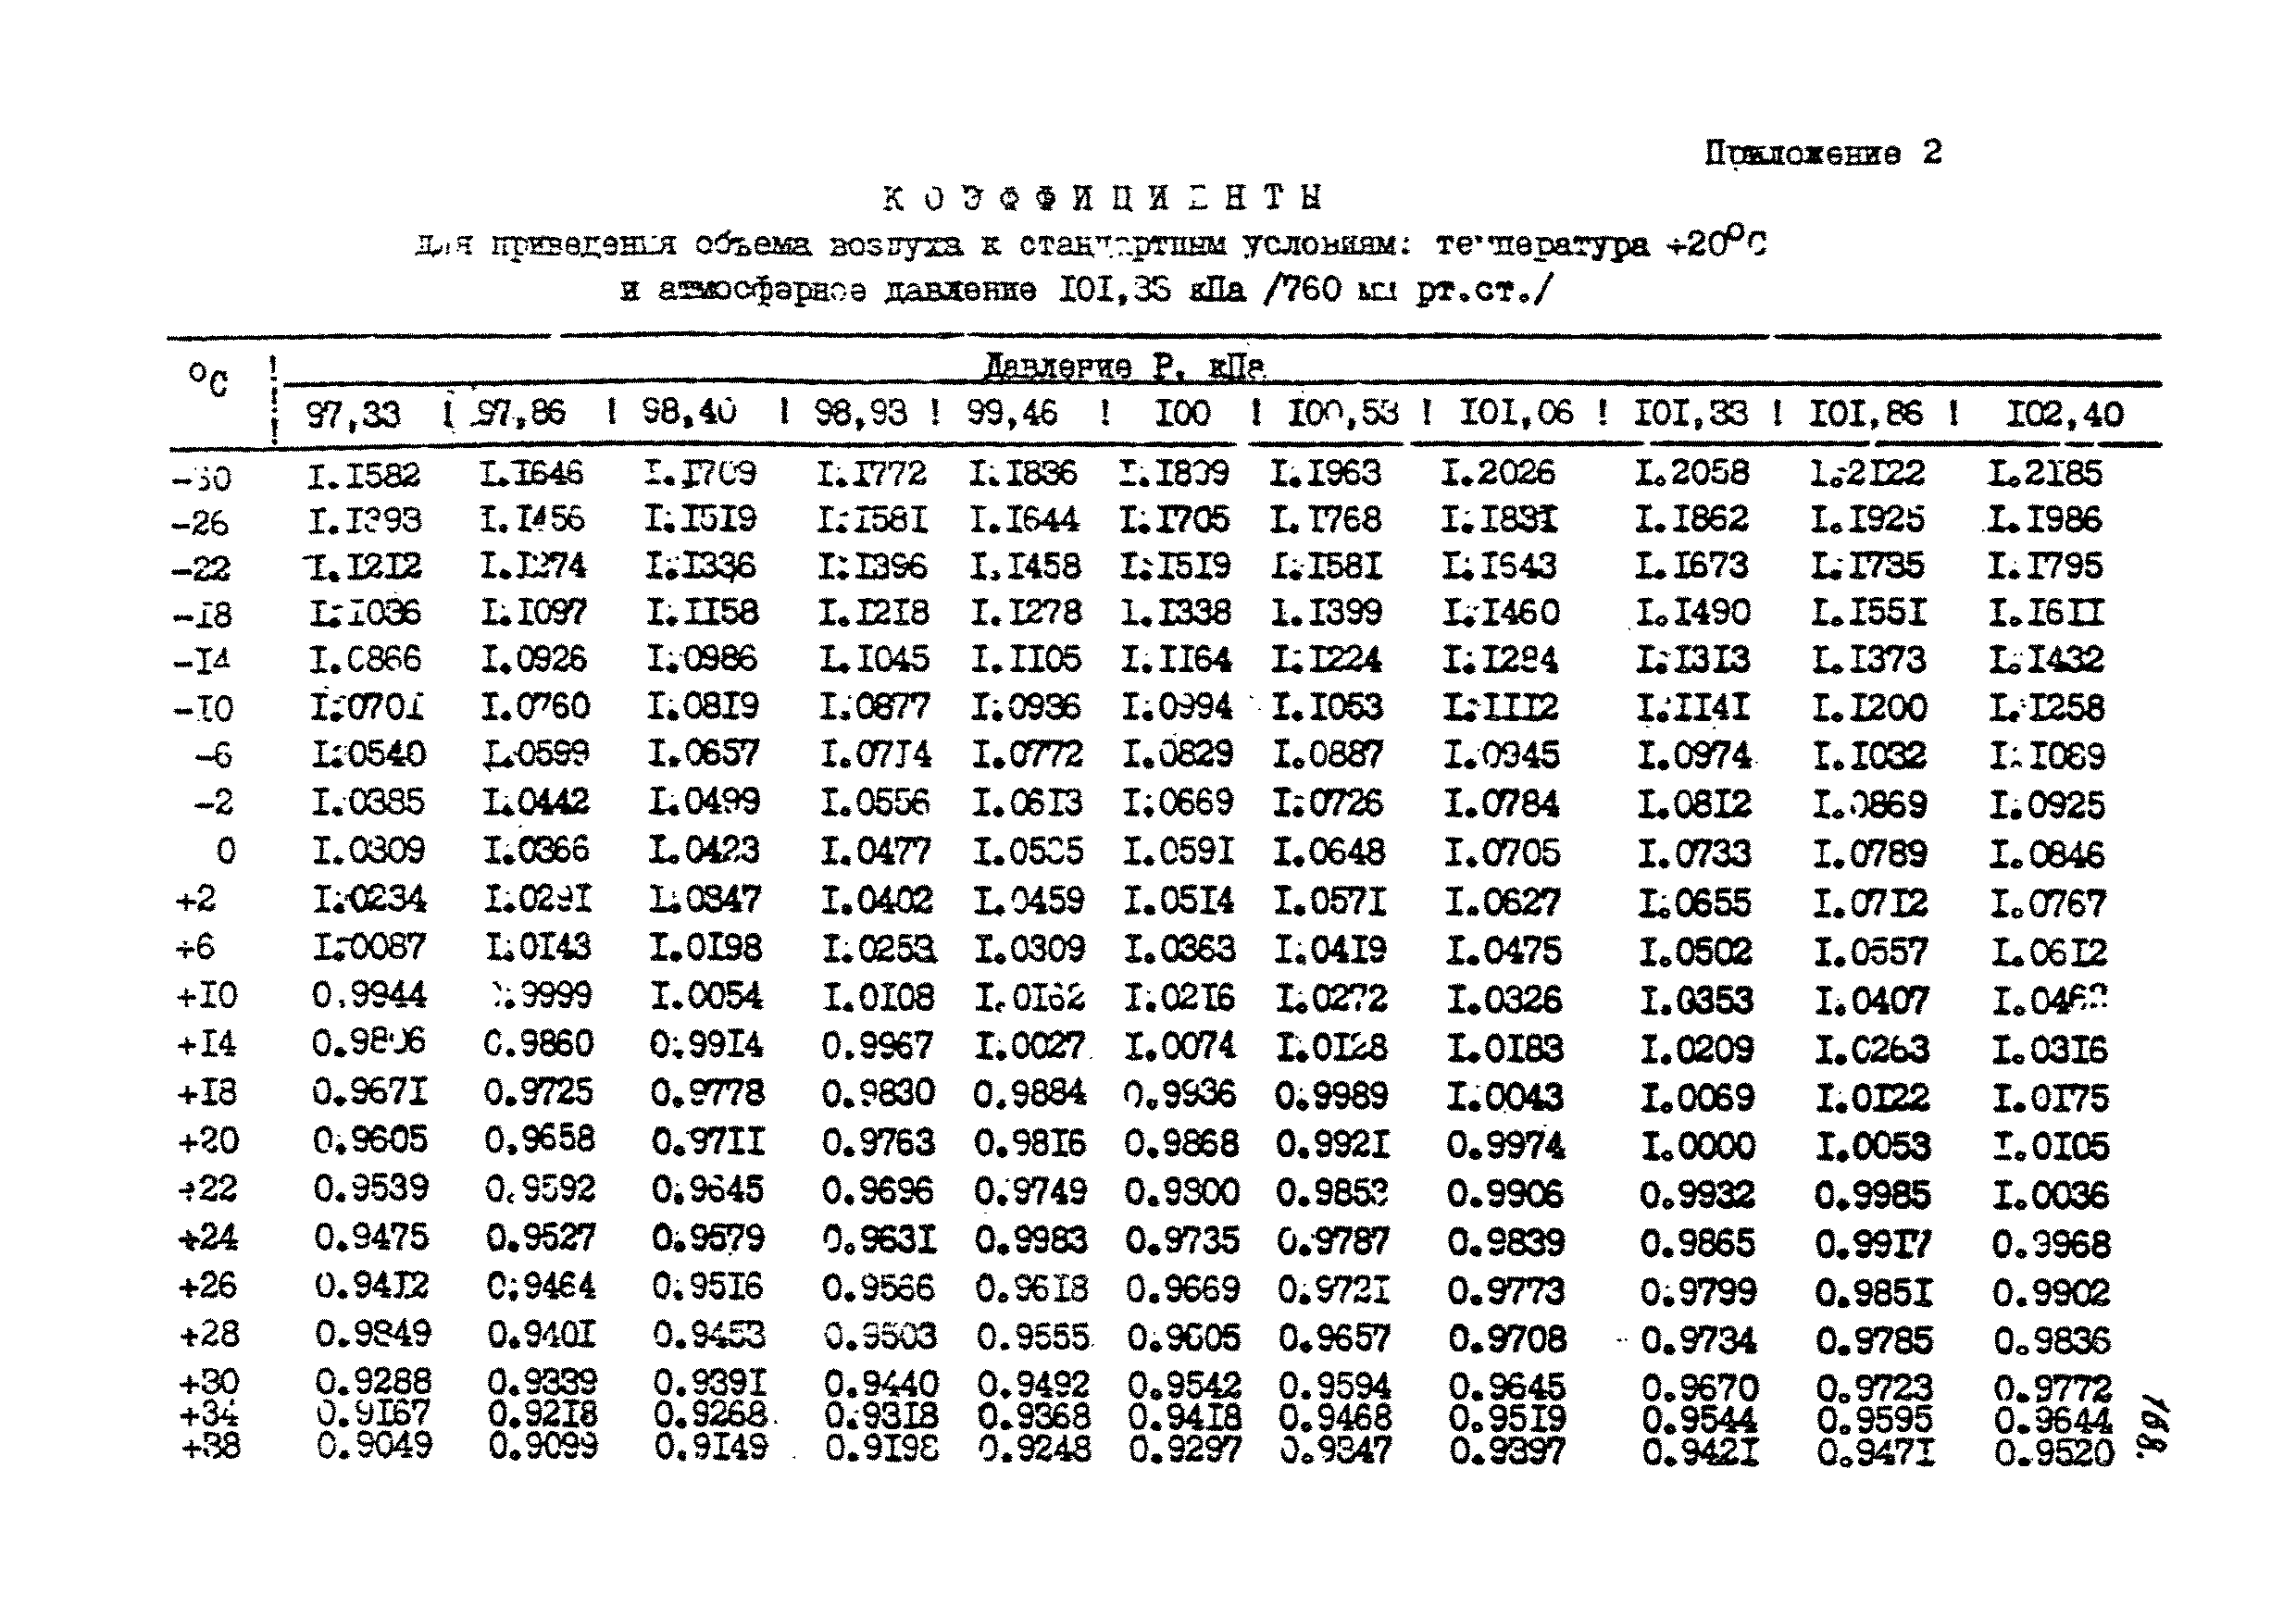 МУ 2775-83